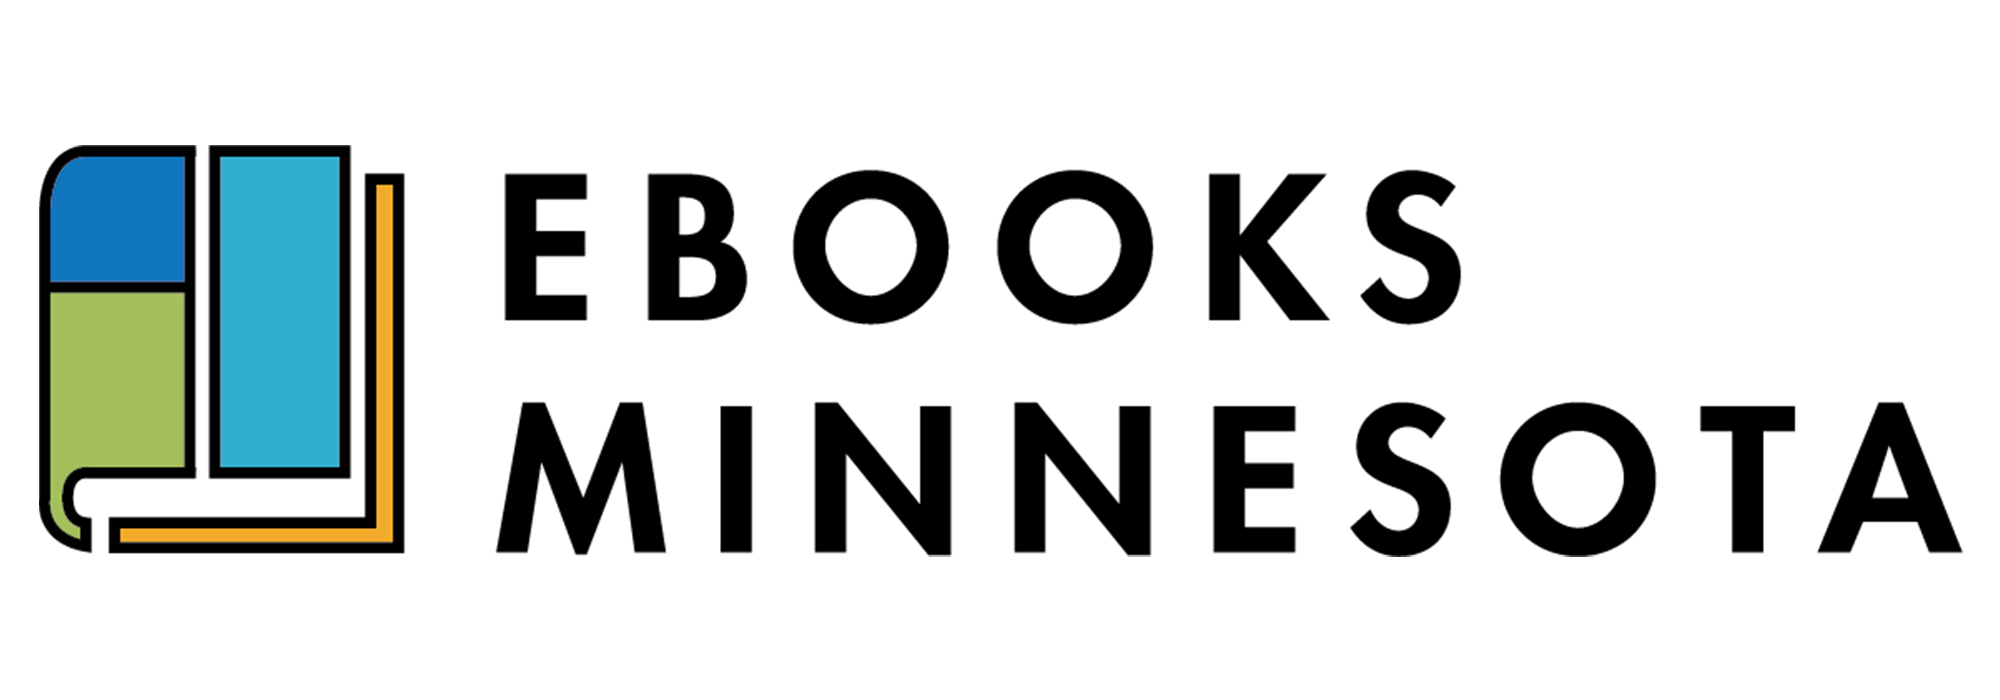 Ebooks Minnesota logo.